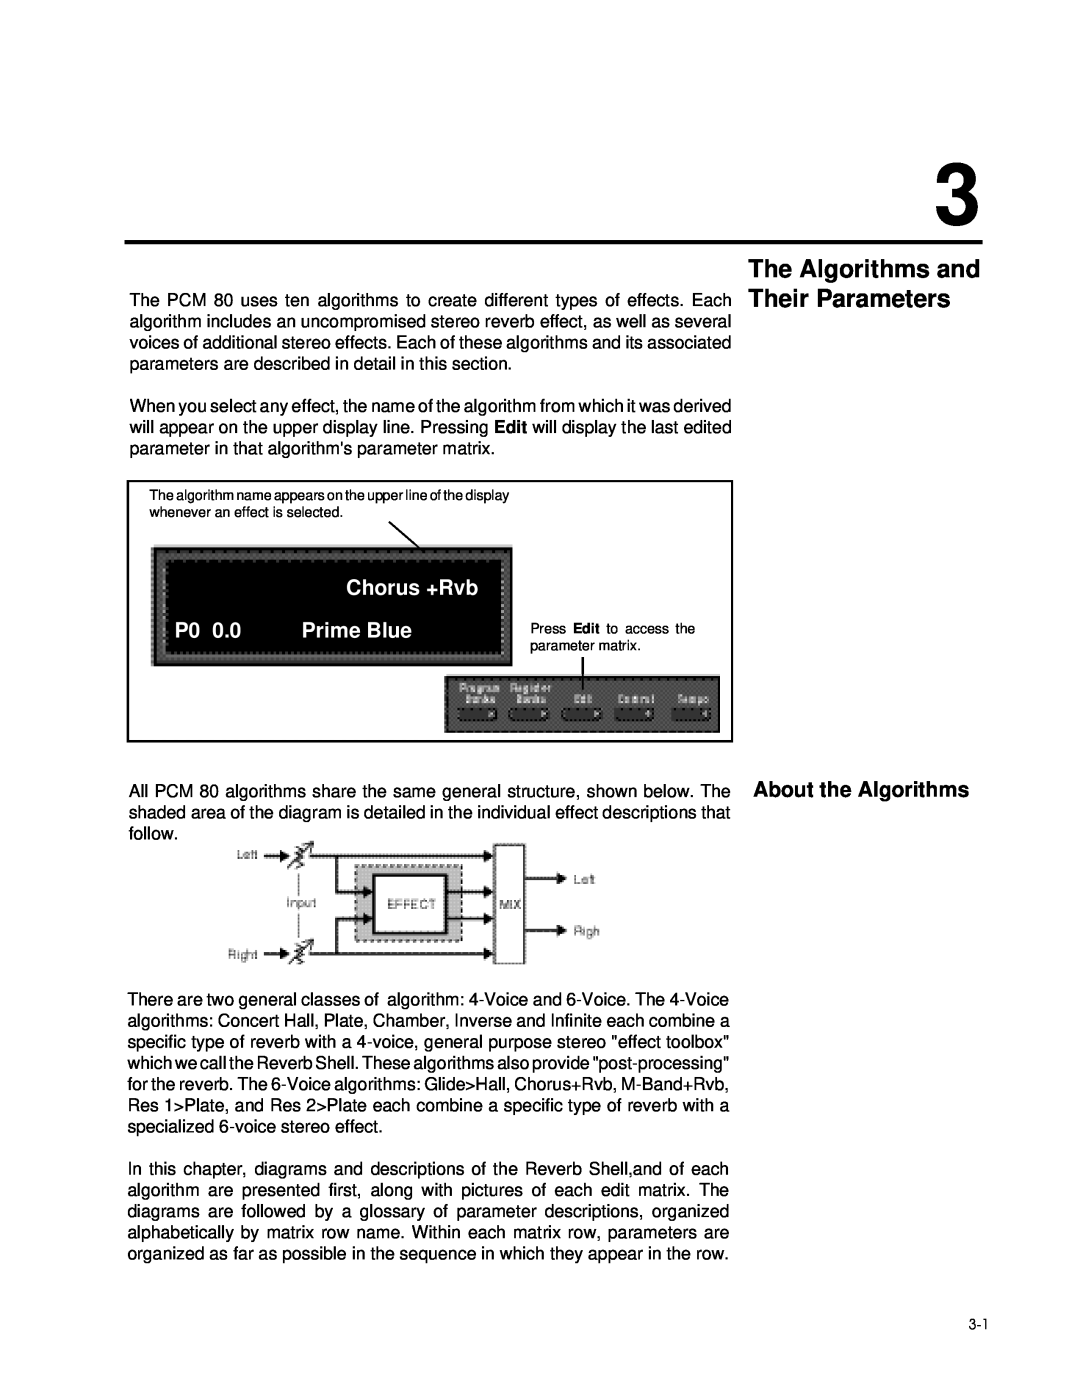 Lexicon PCM 80 manual The Algorithms and Their Parameters, Chorus +Rvb, Prime Blue 